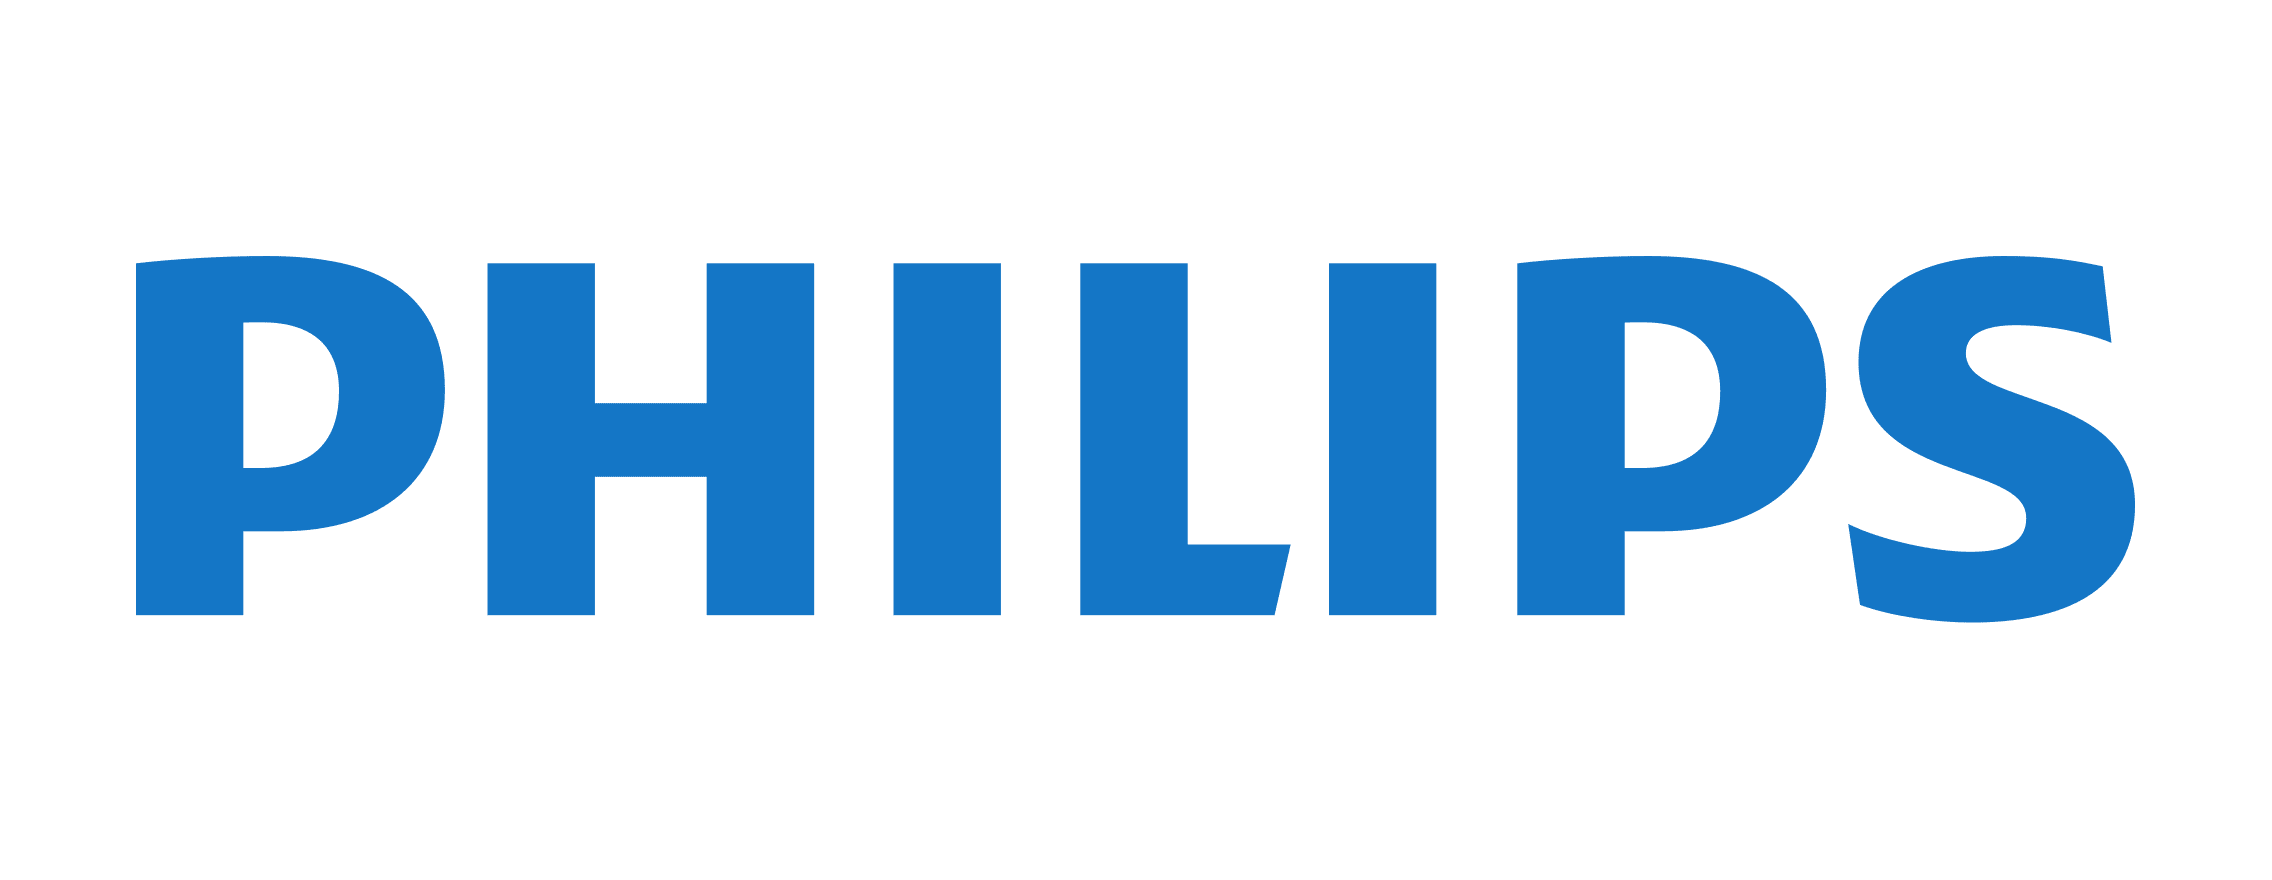 philips logo wordmark - صفحه اصلی